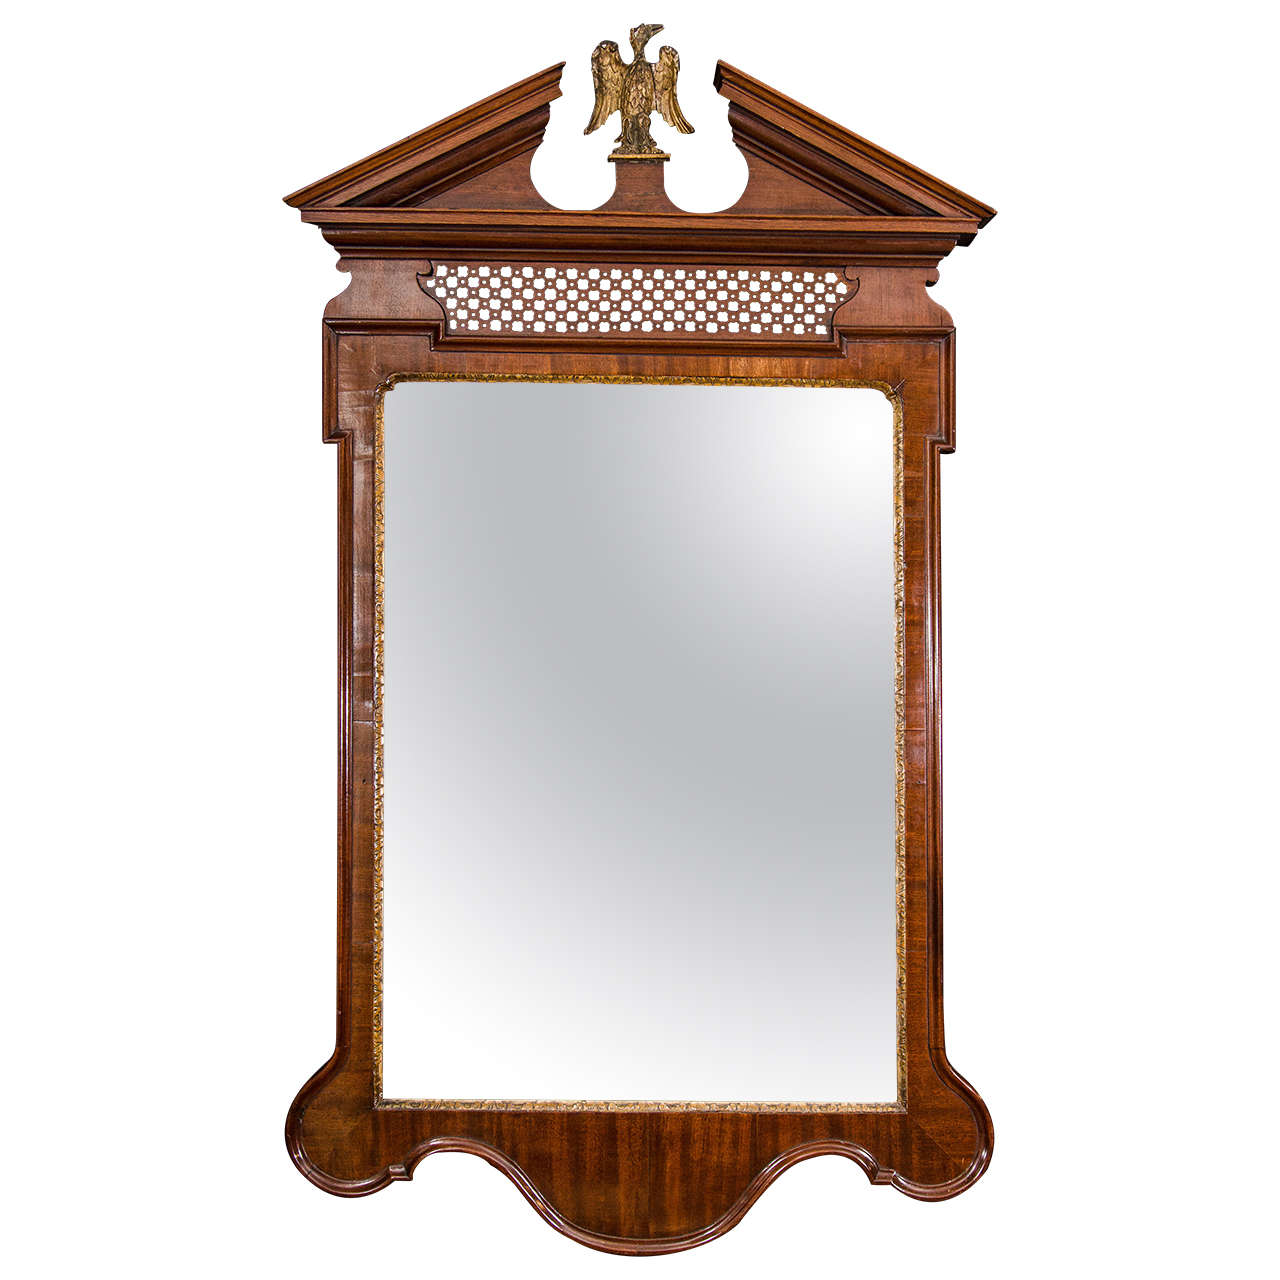 George II Mahogany Fret Panel Mirror